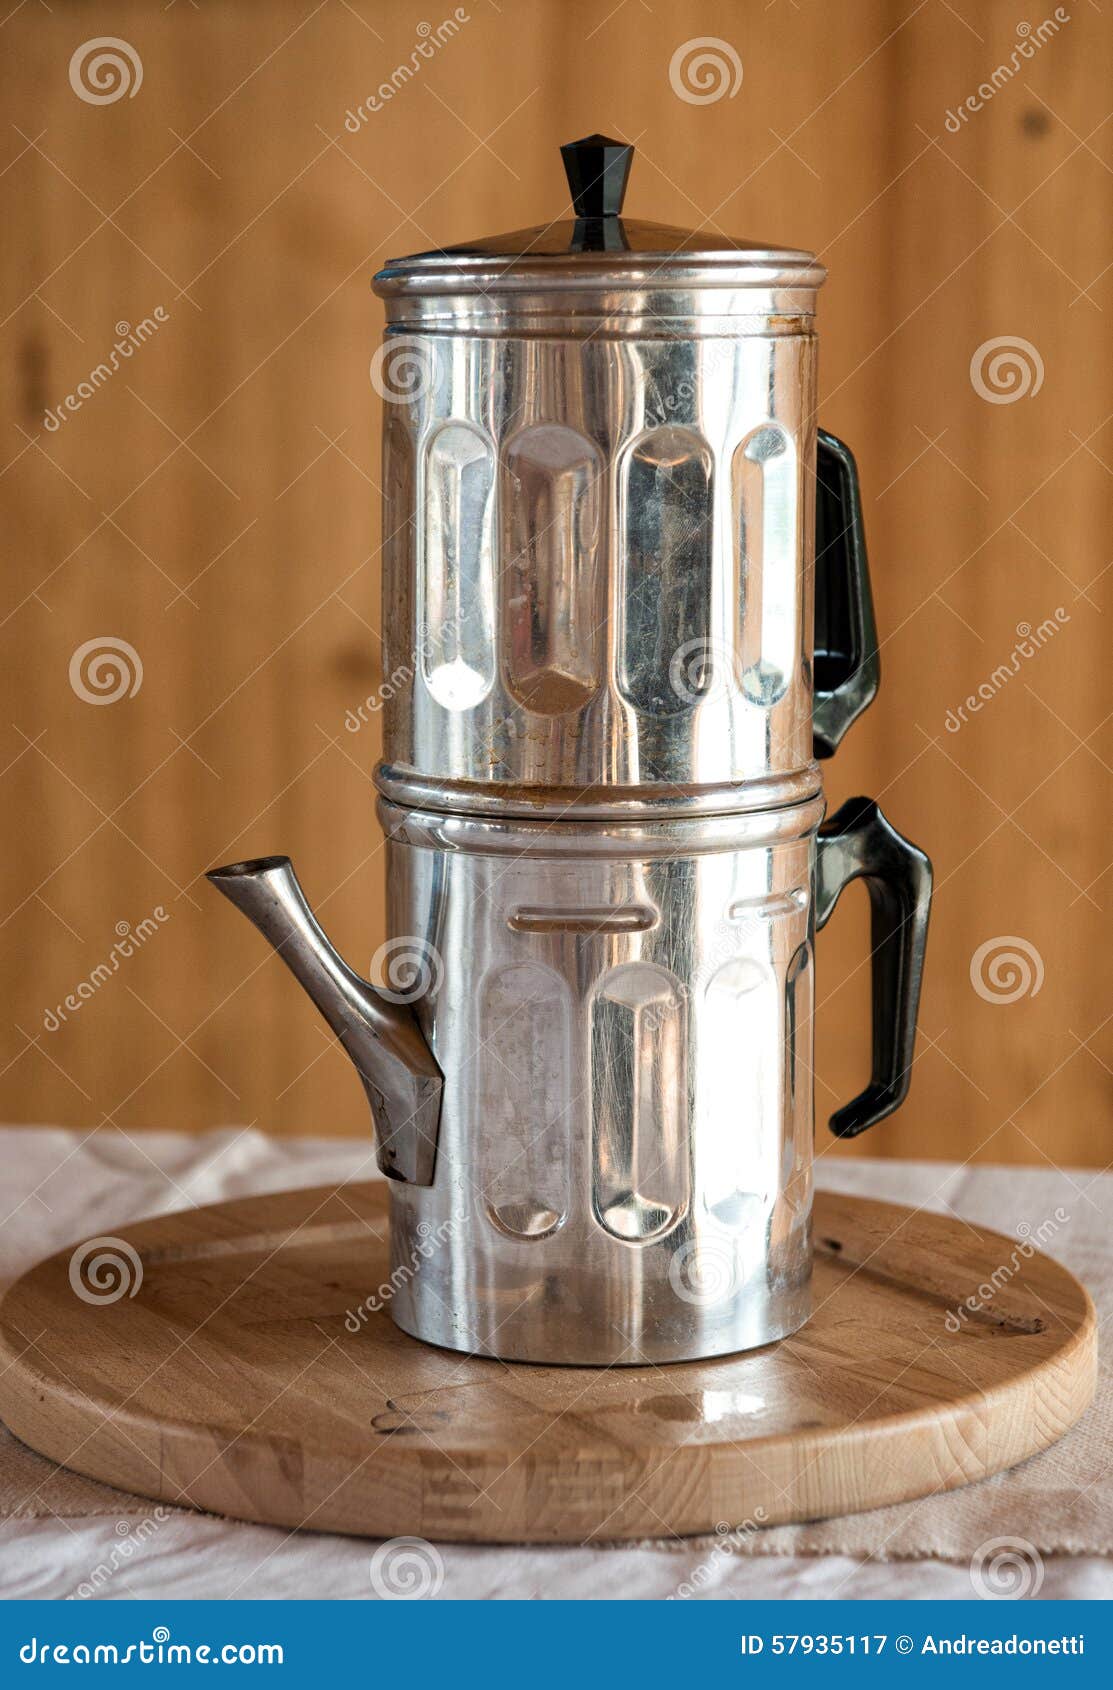 https://thumbs.dreamstime.com/z/neapolitan-coffee-pot-traditional-italian-percolator-naples-57935117.jpg